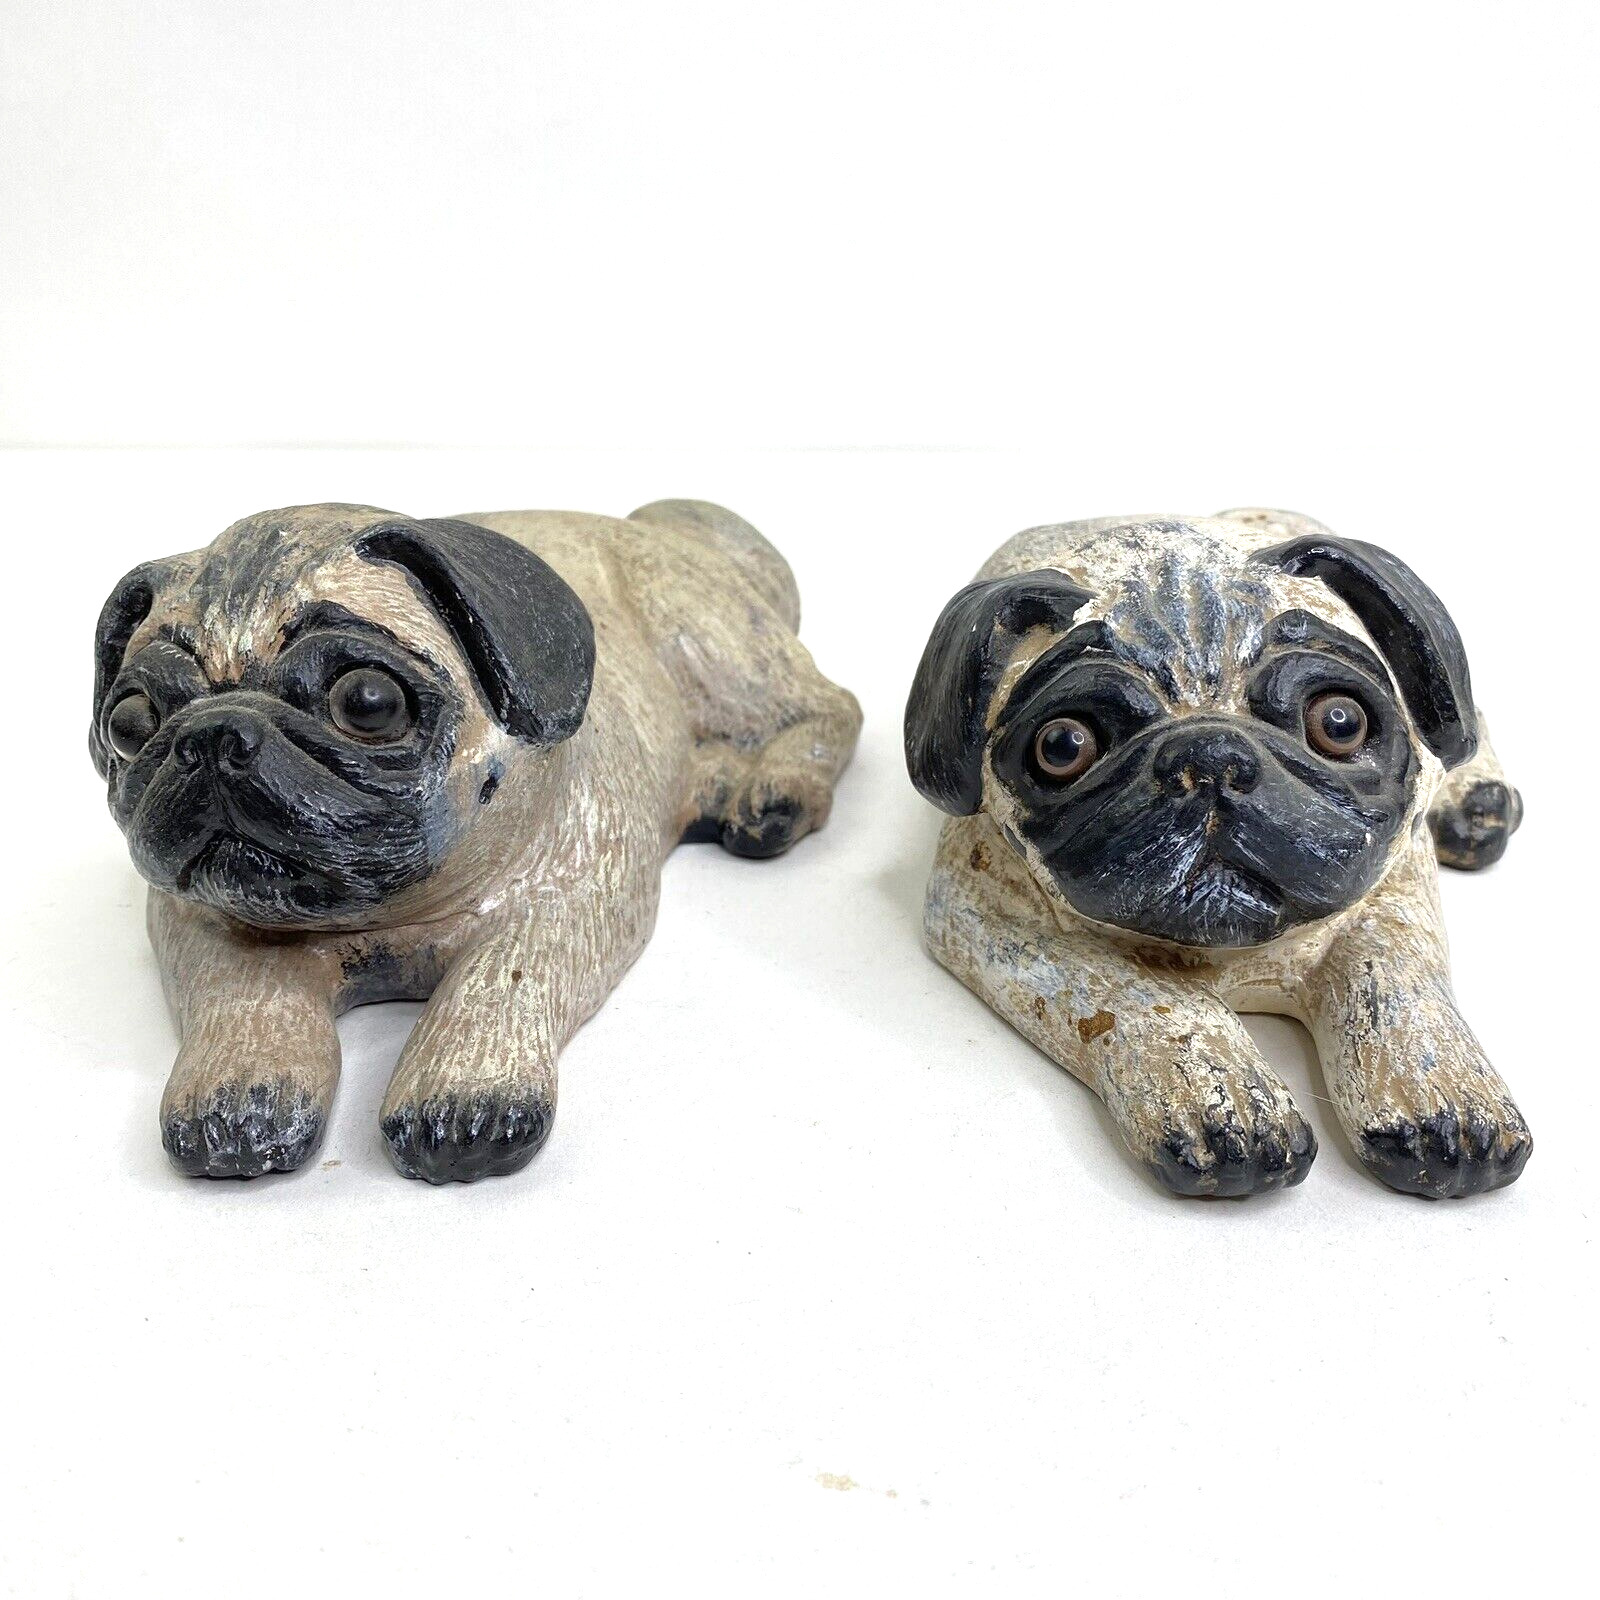 Adorable Vintage Ceramic Pug Dogs (Set of 2) Home Decor